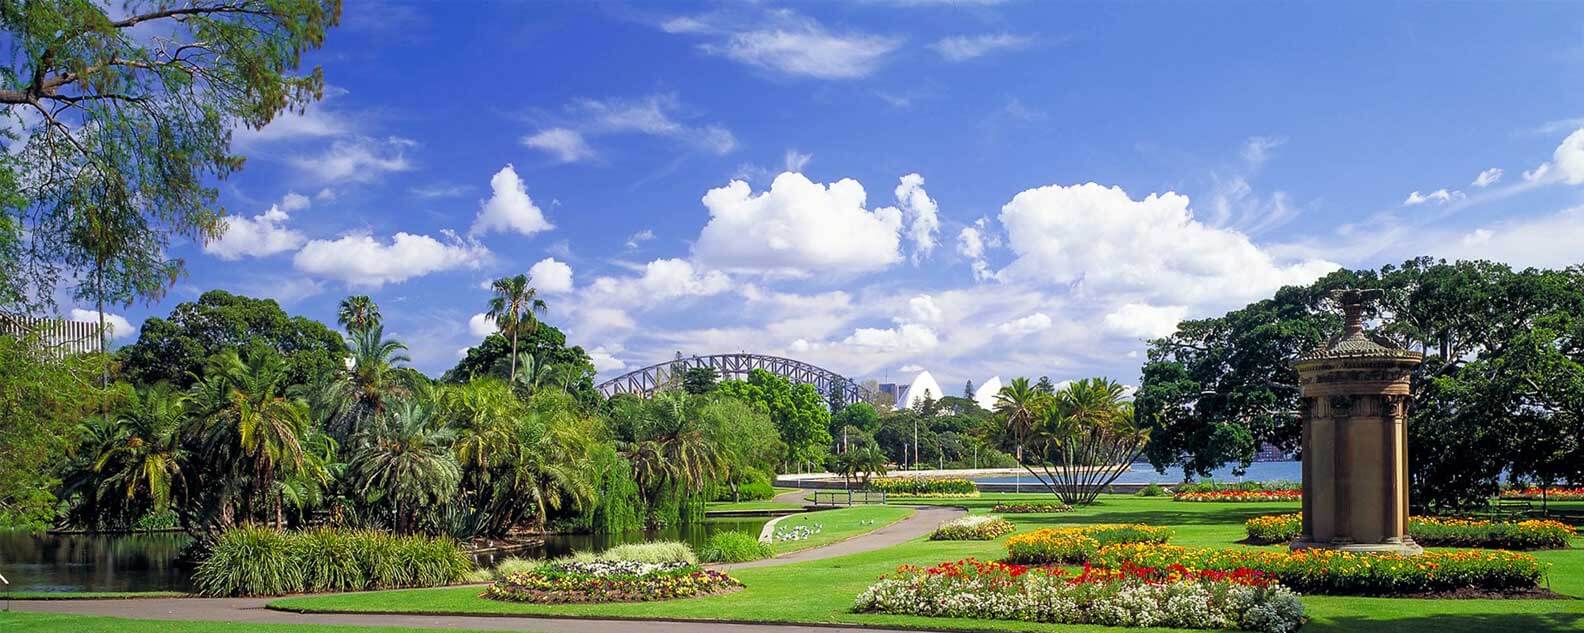 Royal Botanical Garden with Harbour bridge view